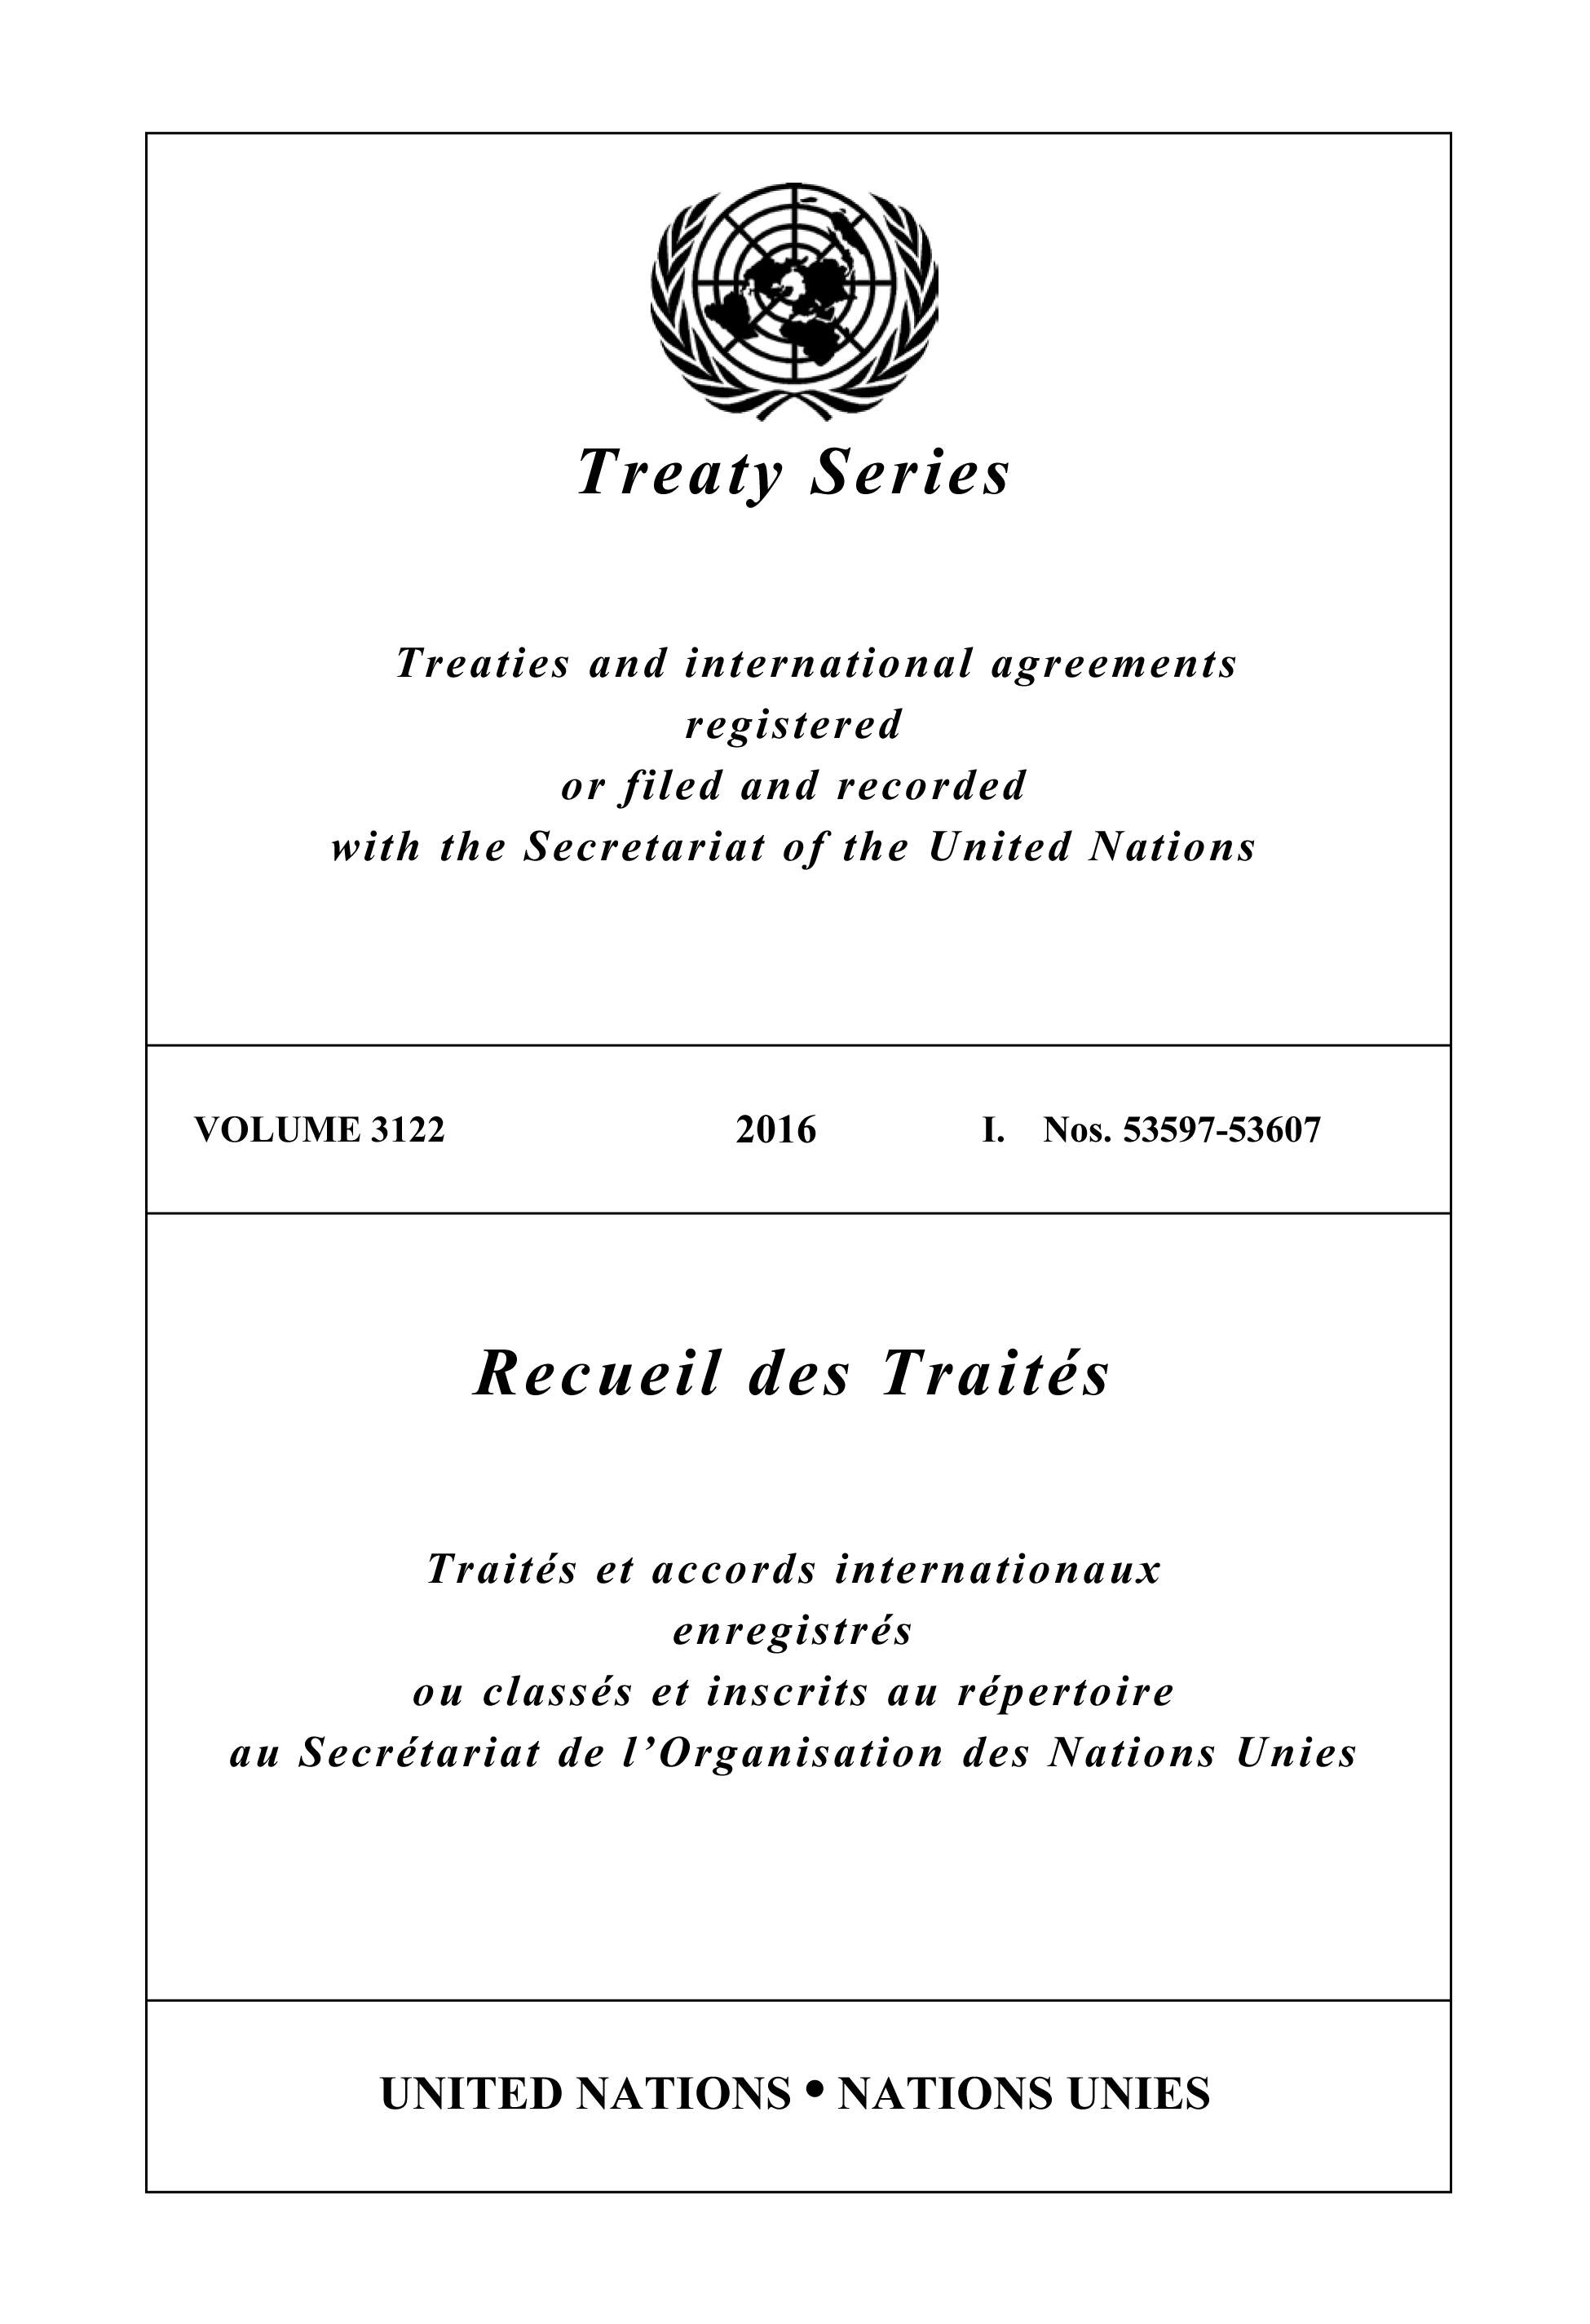 image of Treaty Series 3122